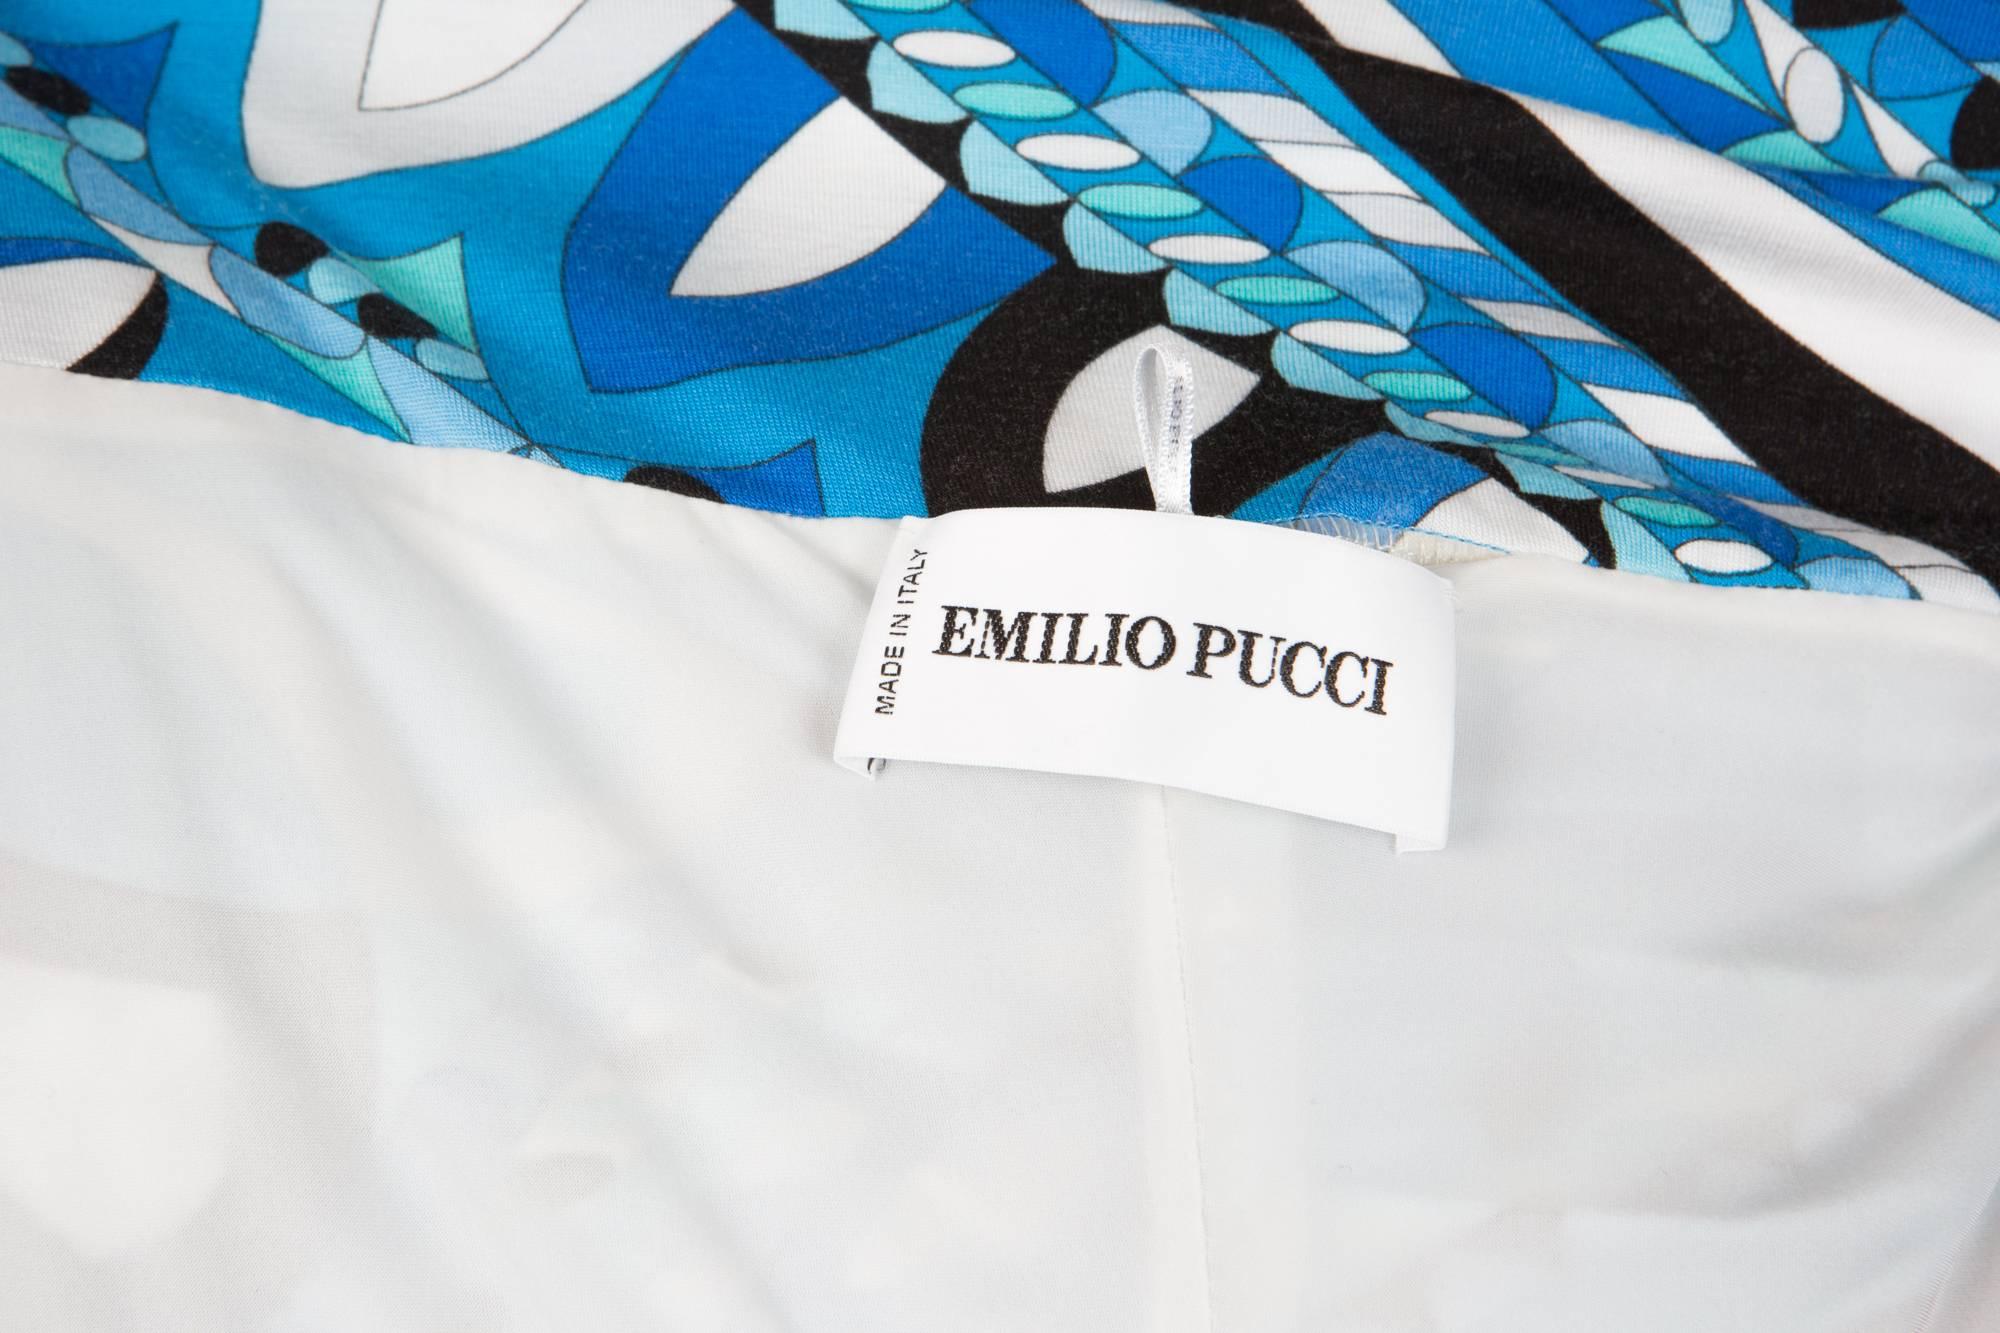 Emilio Pucci Blue Turquoise Graphic Dress 1